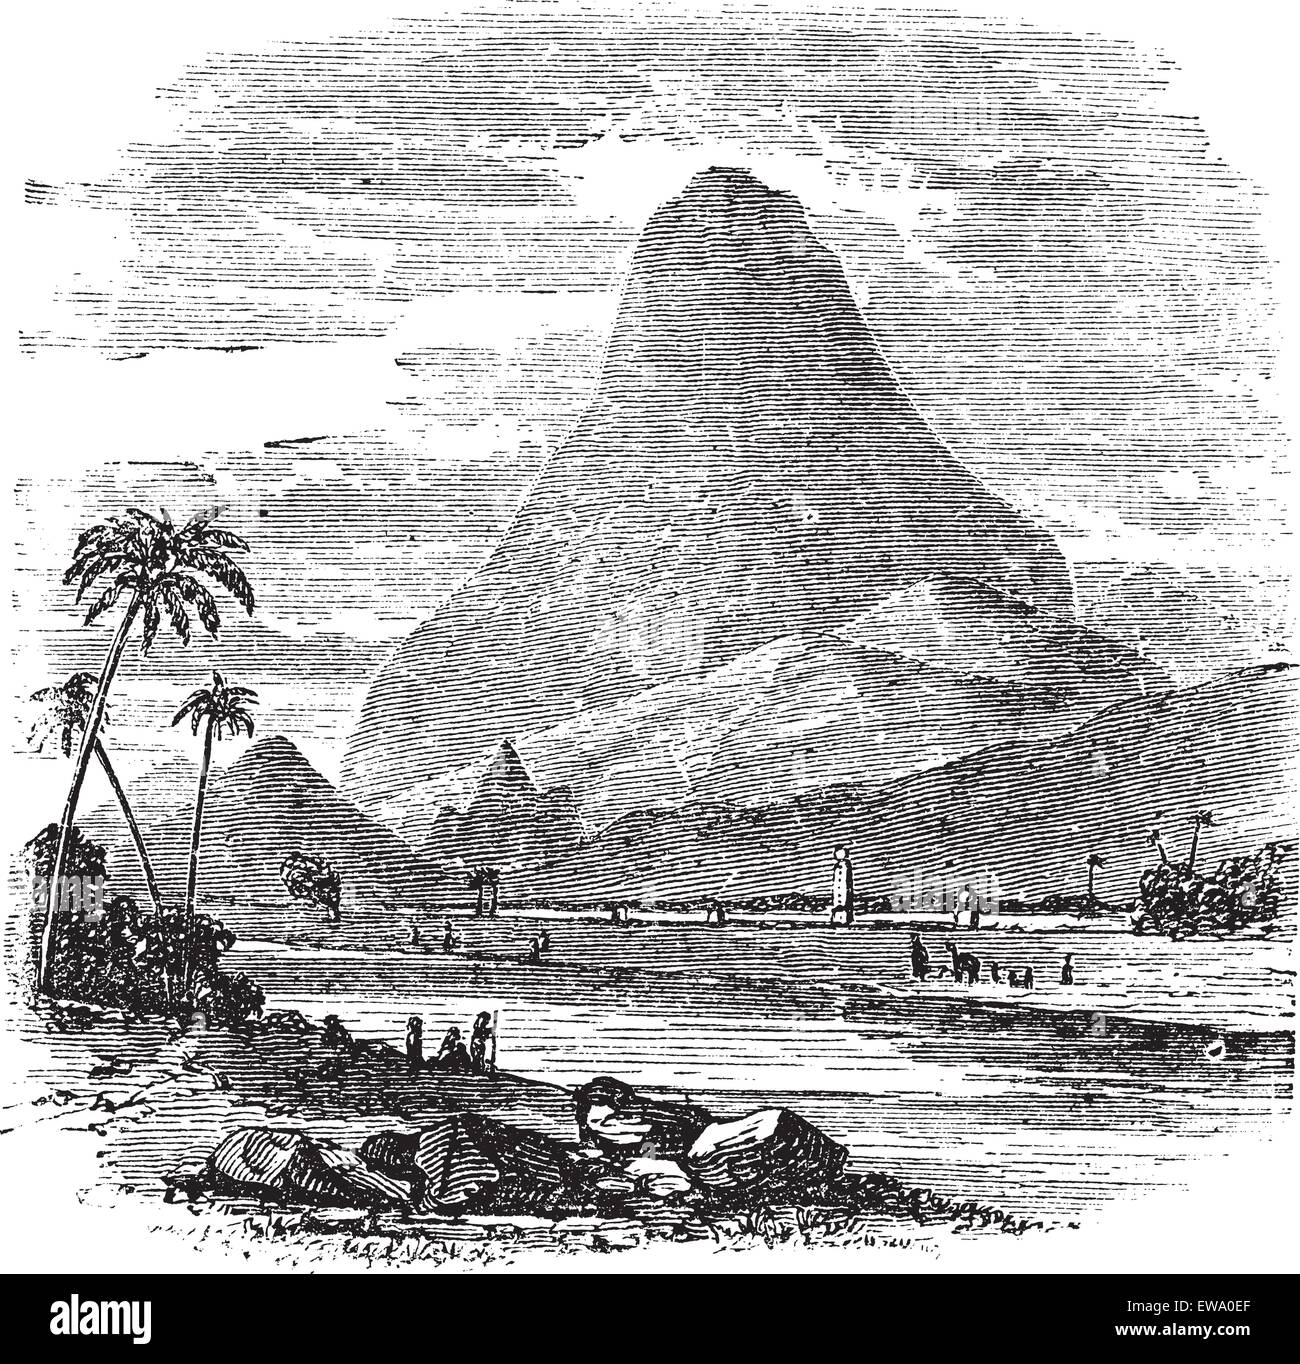 Comorin Peak in Kanyakumari, Tamil Nadu, India, vintage engraving. Old engraved illustration of Comorin Peak. Stock Vector